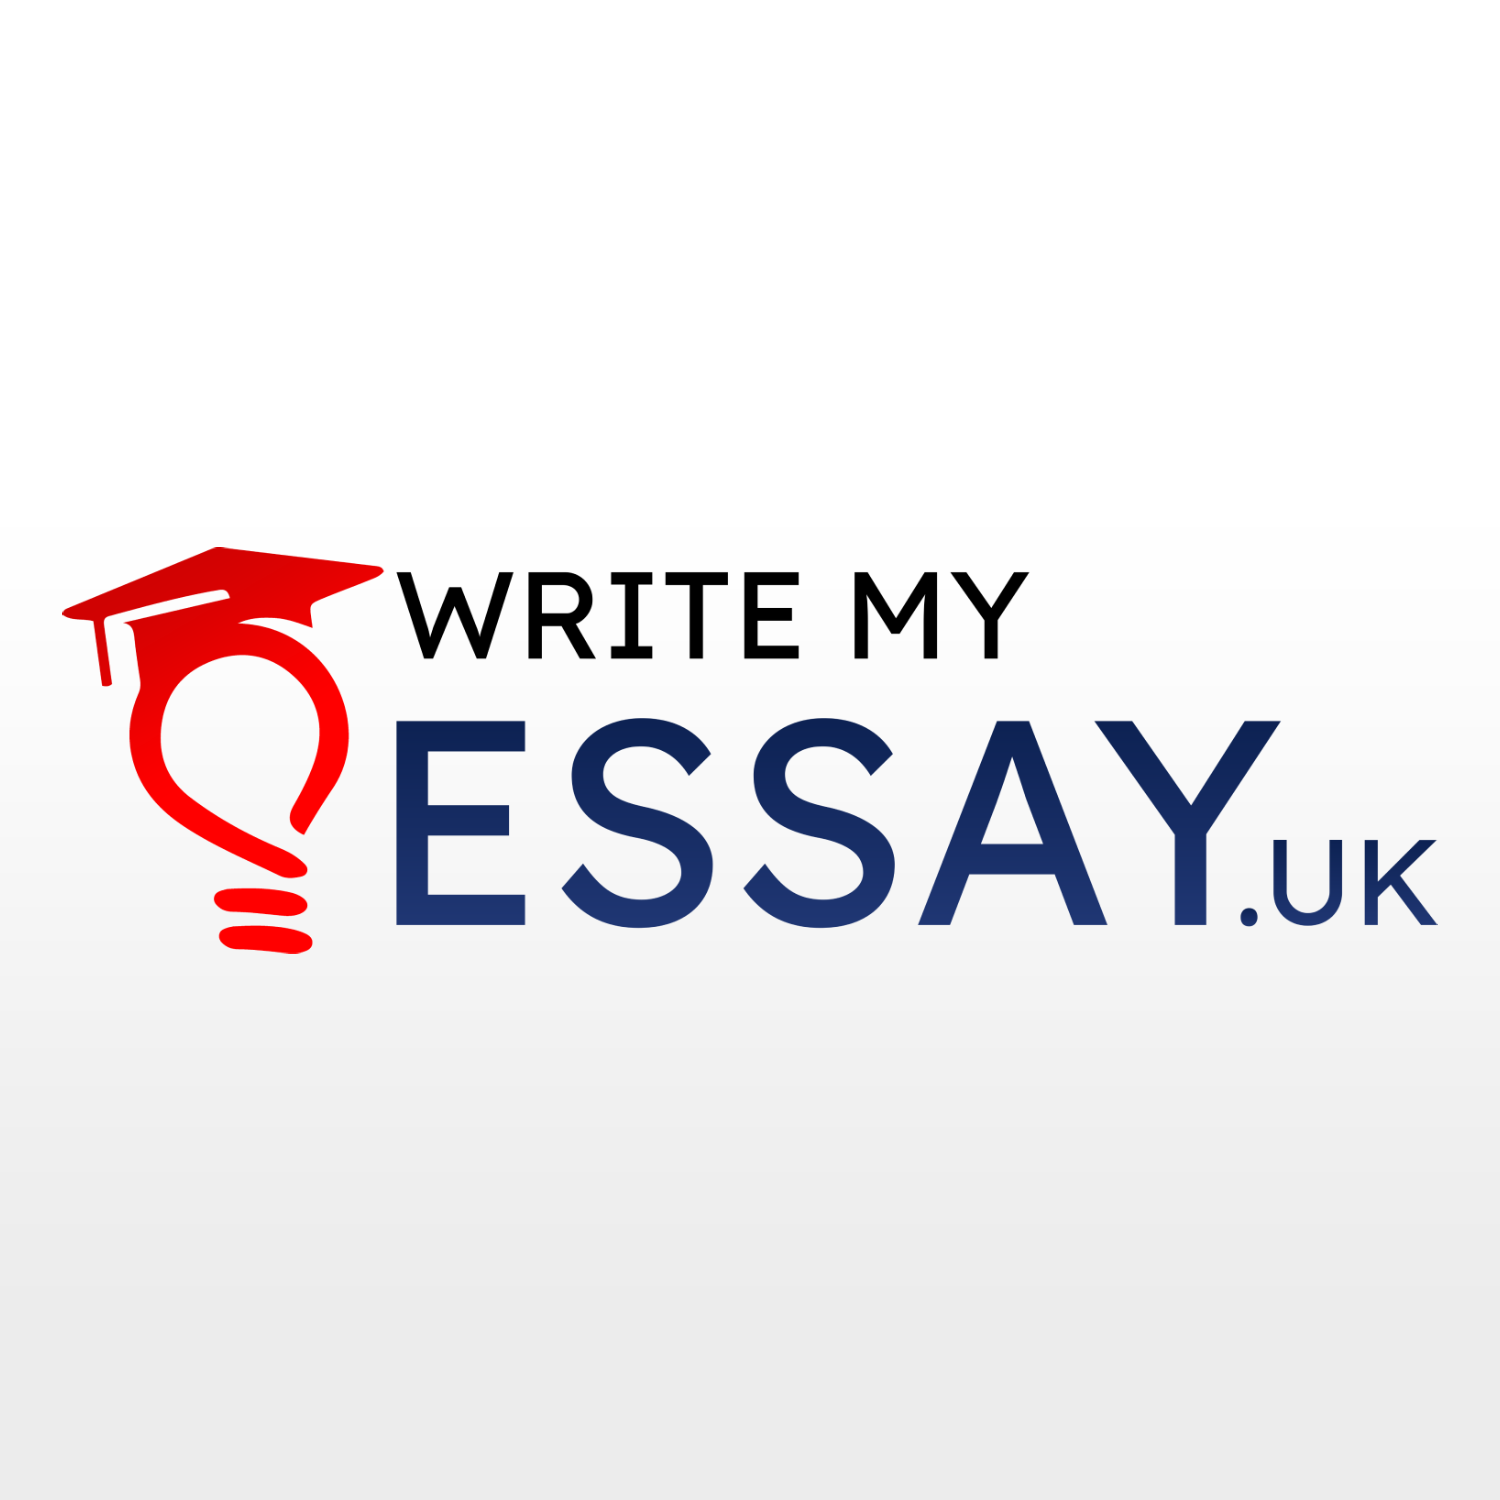 WriteMyEssay: Top-Notch Research Paper Help